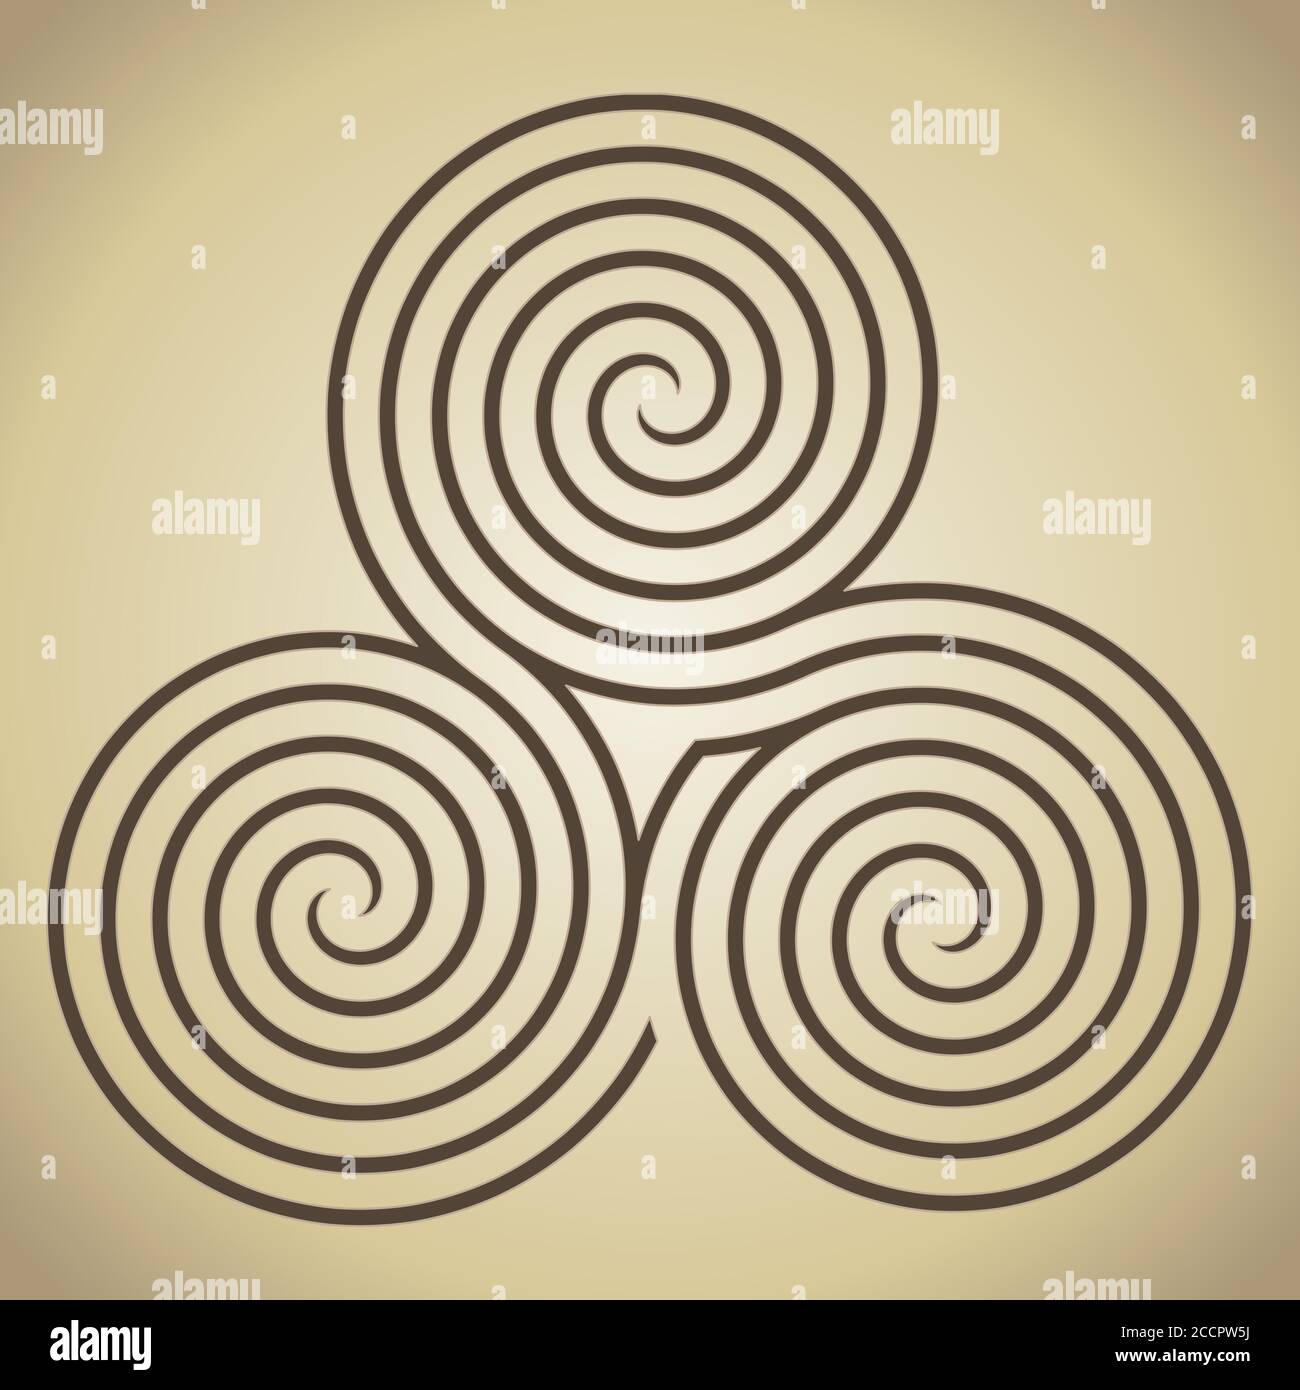 Dreifache Spirale Labyrinth, Triskelion mythologische Design, Vektor-Illustration Stock Vektor